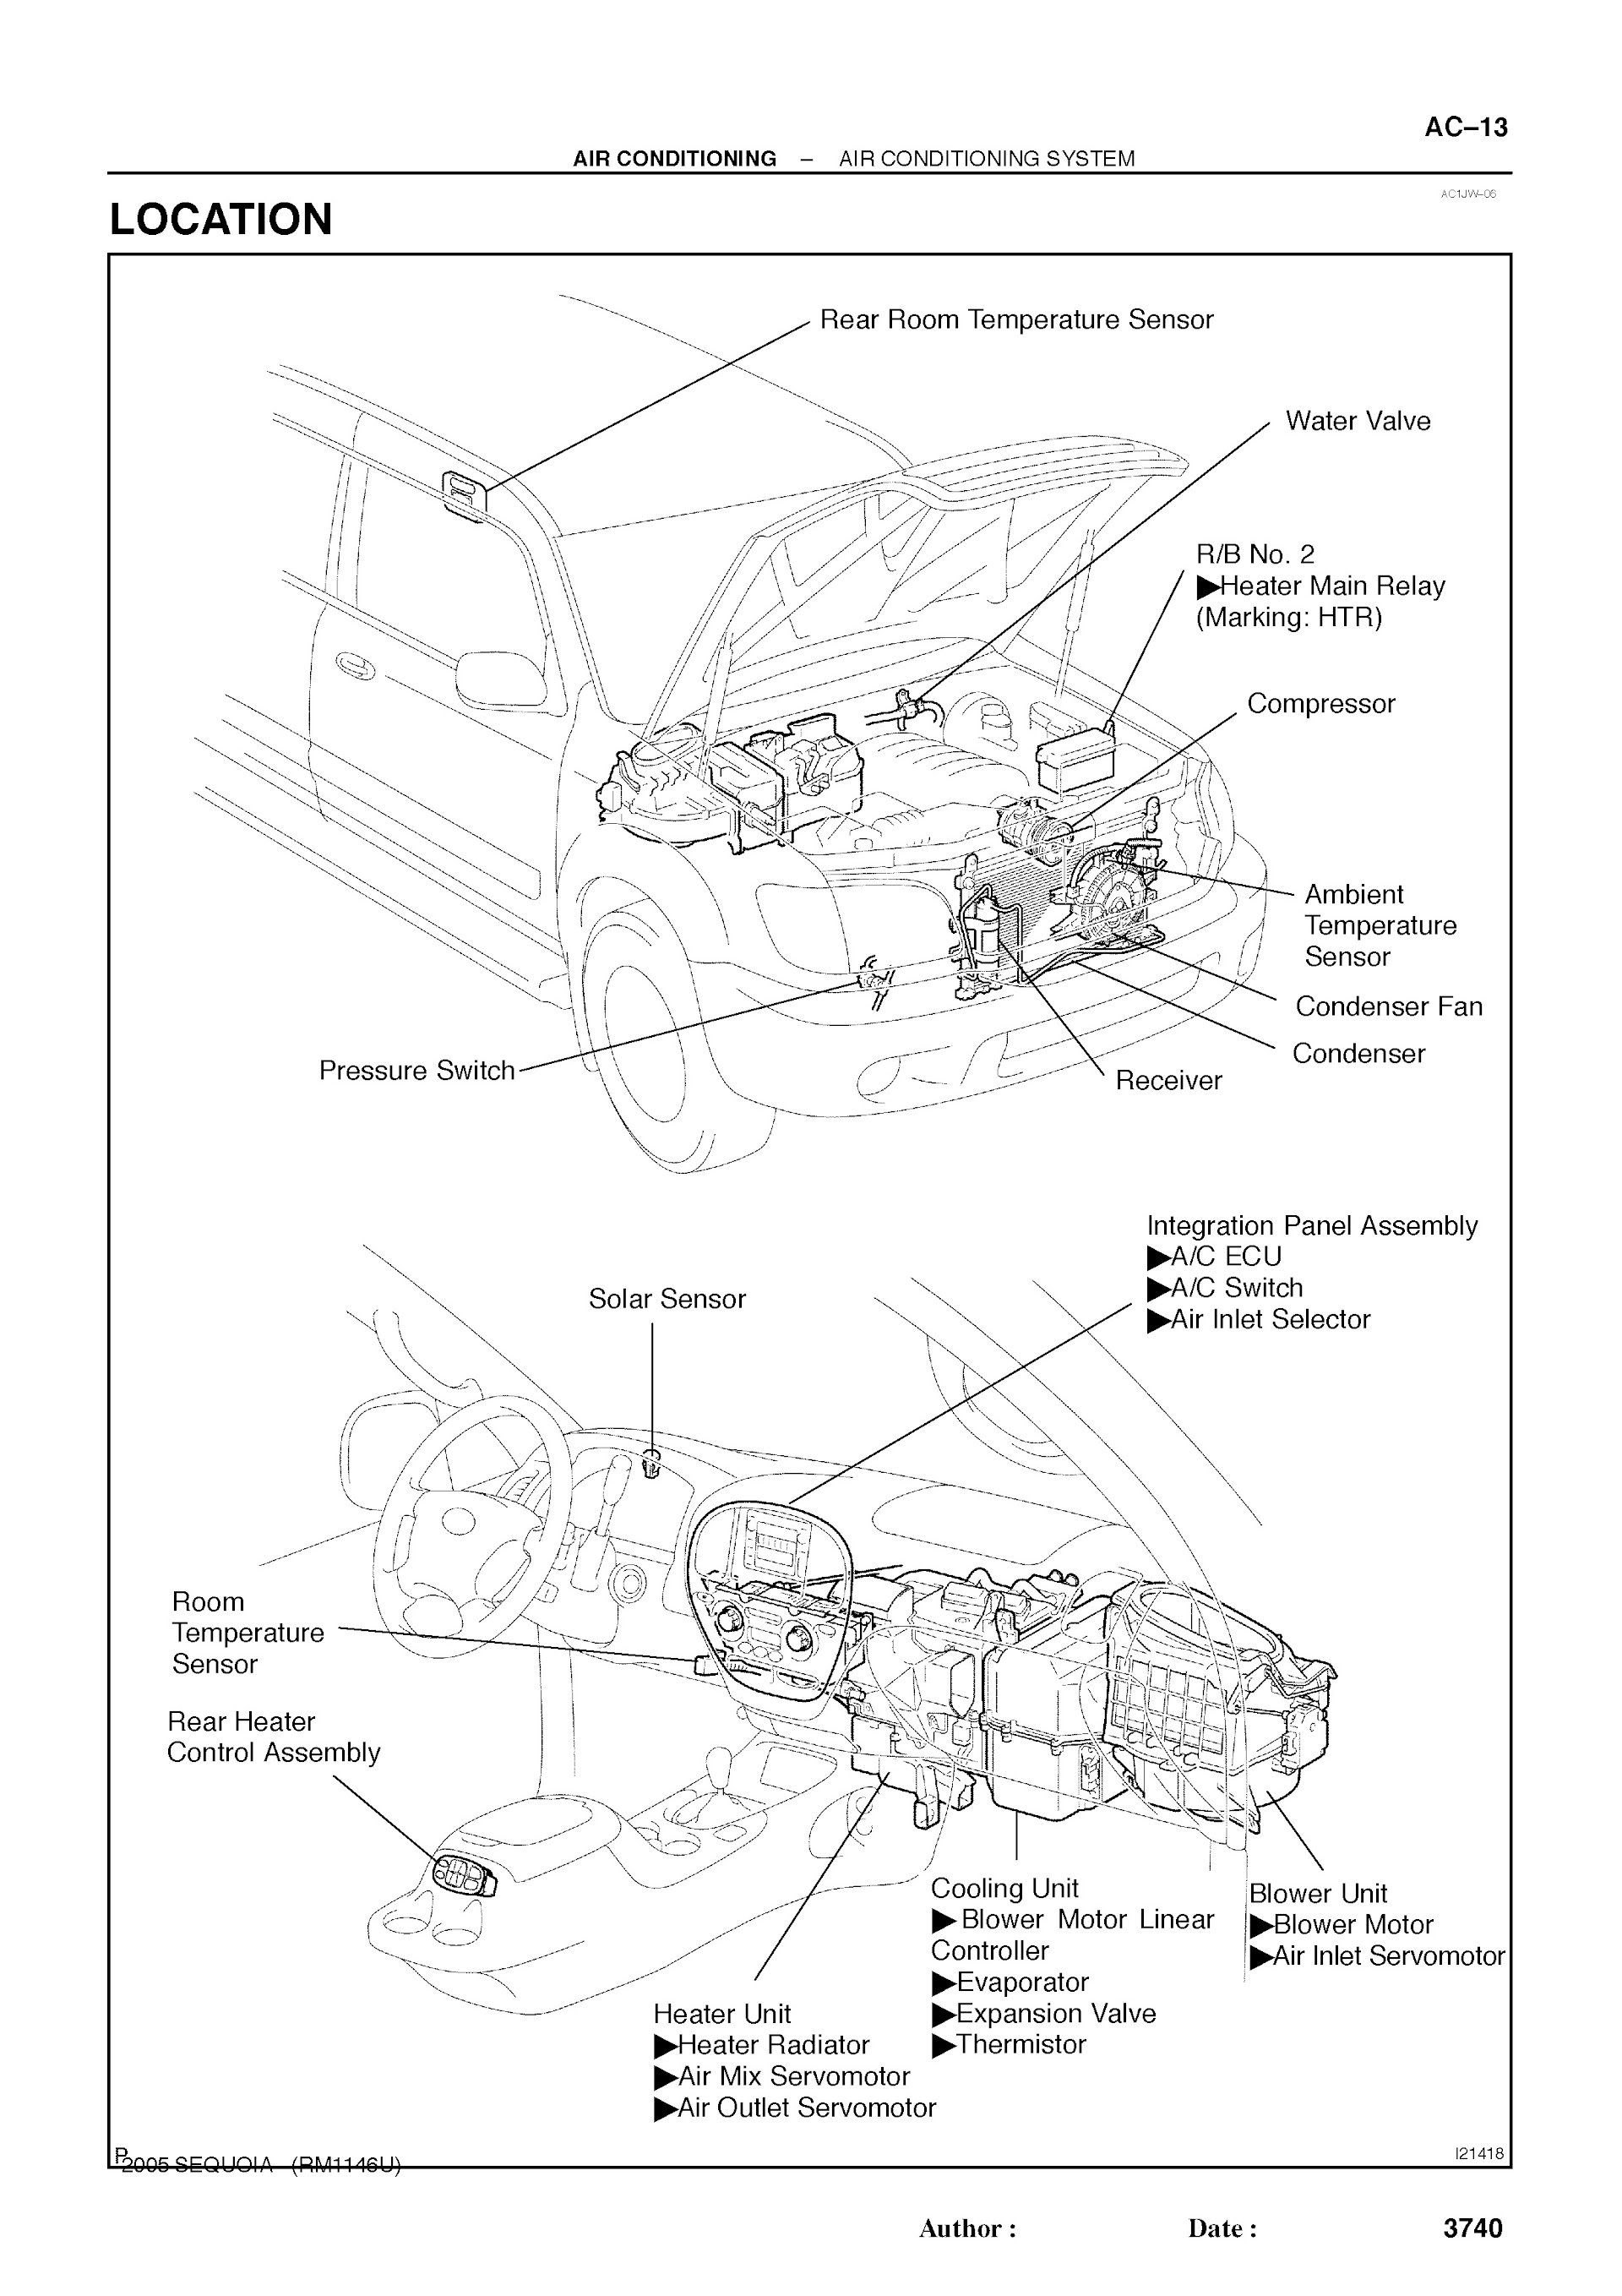 2007 Toyota Sequoia Repair Manual, Air Conditioning Components